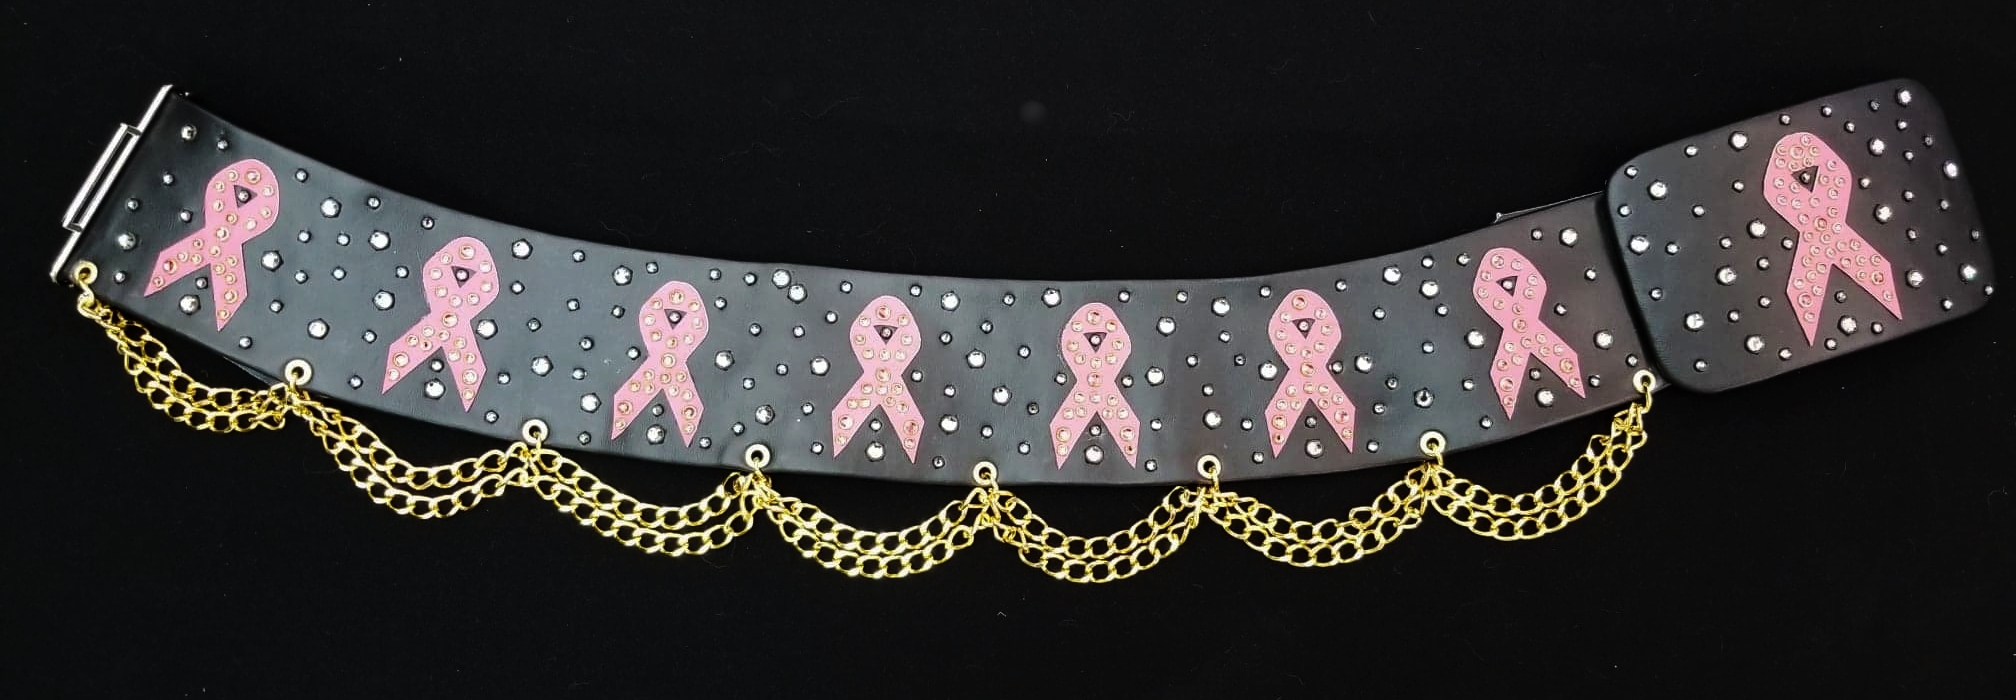 Breast Cancer Belt.jpg